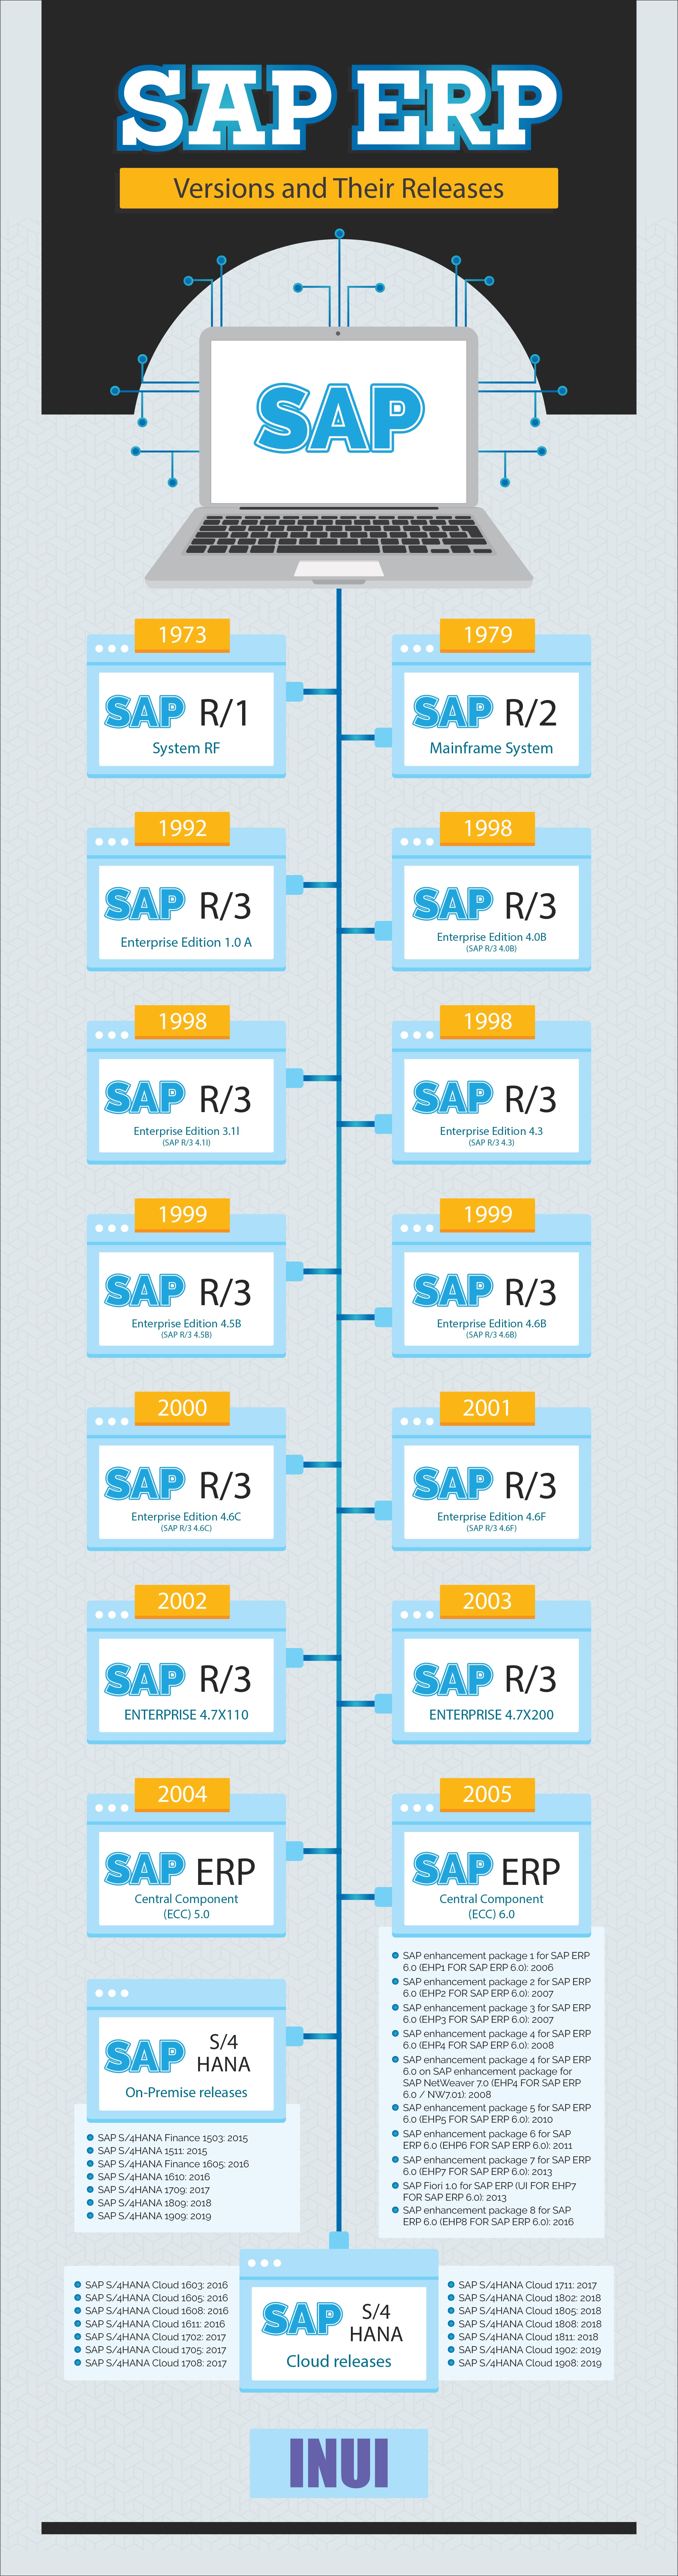 SAP ERP Image